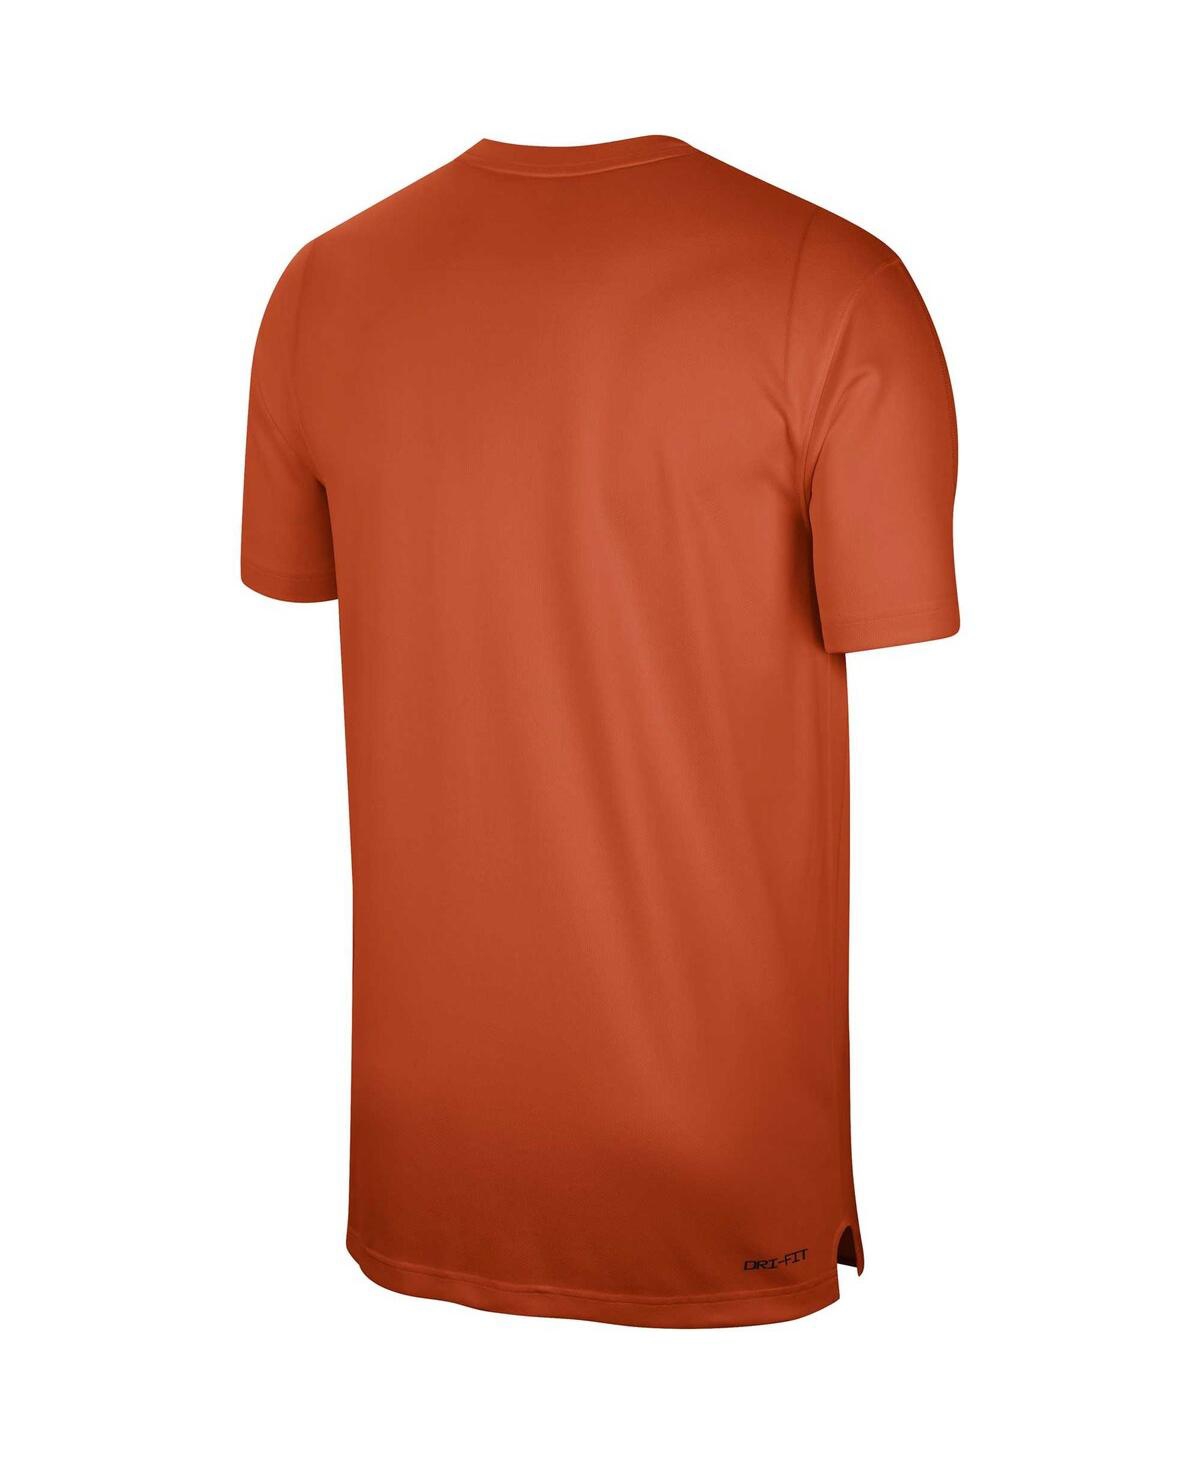 Shop Nike Men's  Orange Clemson Tigers Sideline Coaches Performance Top